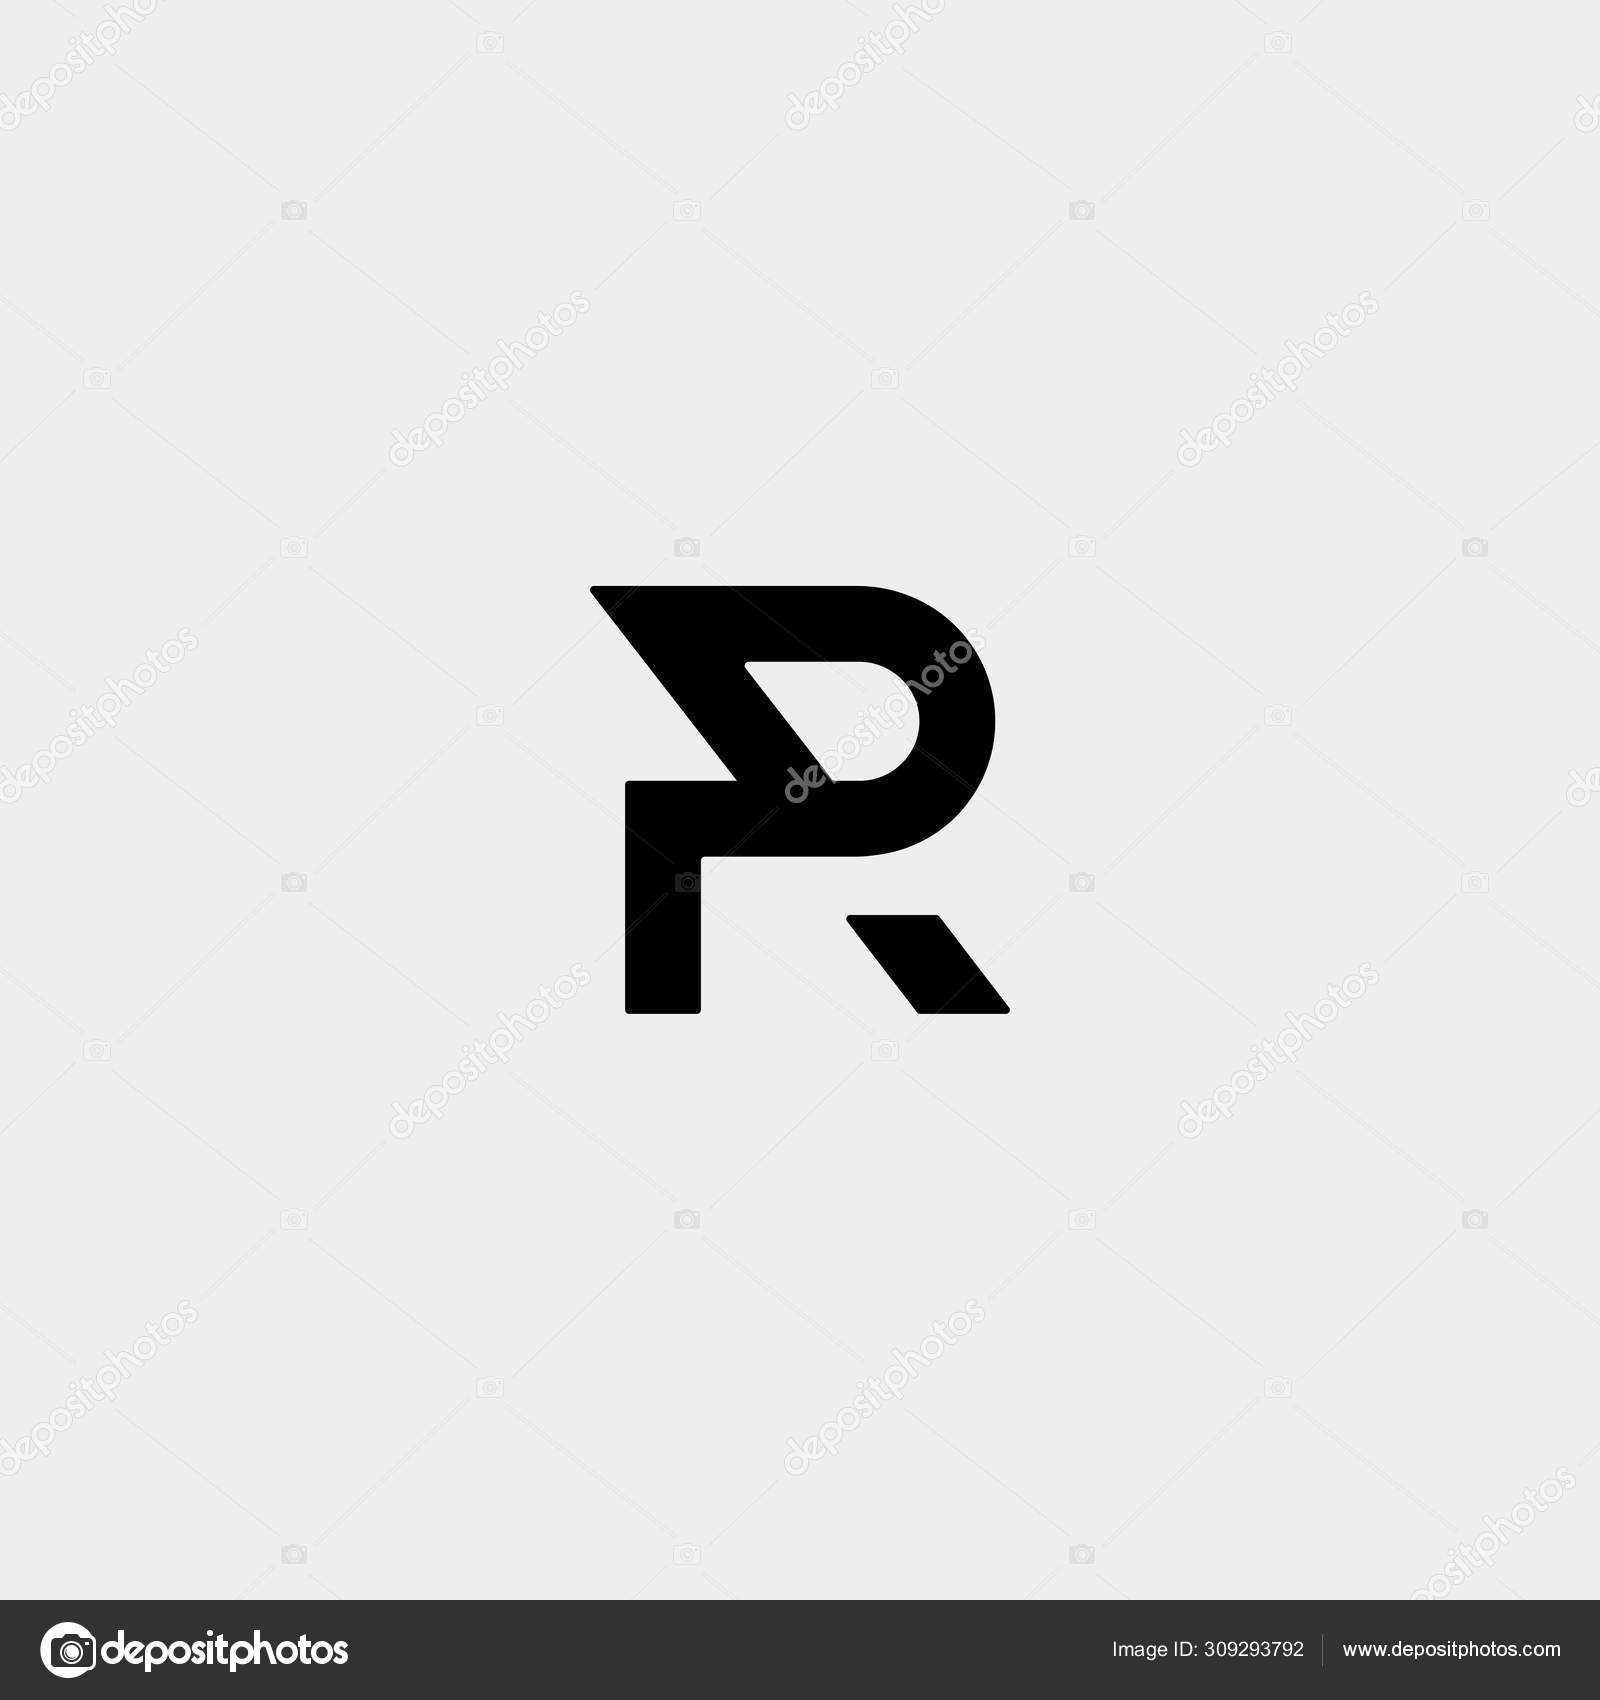 Monogram logo design template pb letter Royalty Free Vector